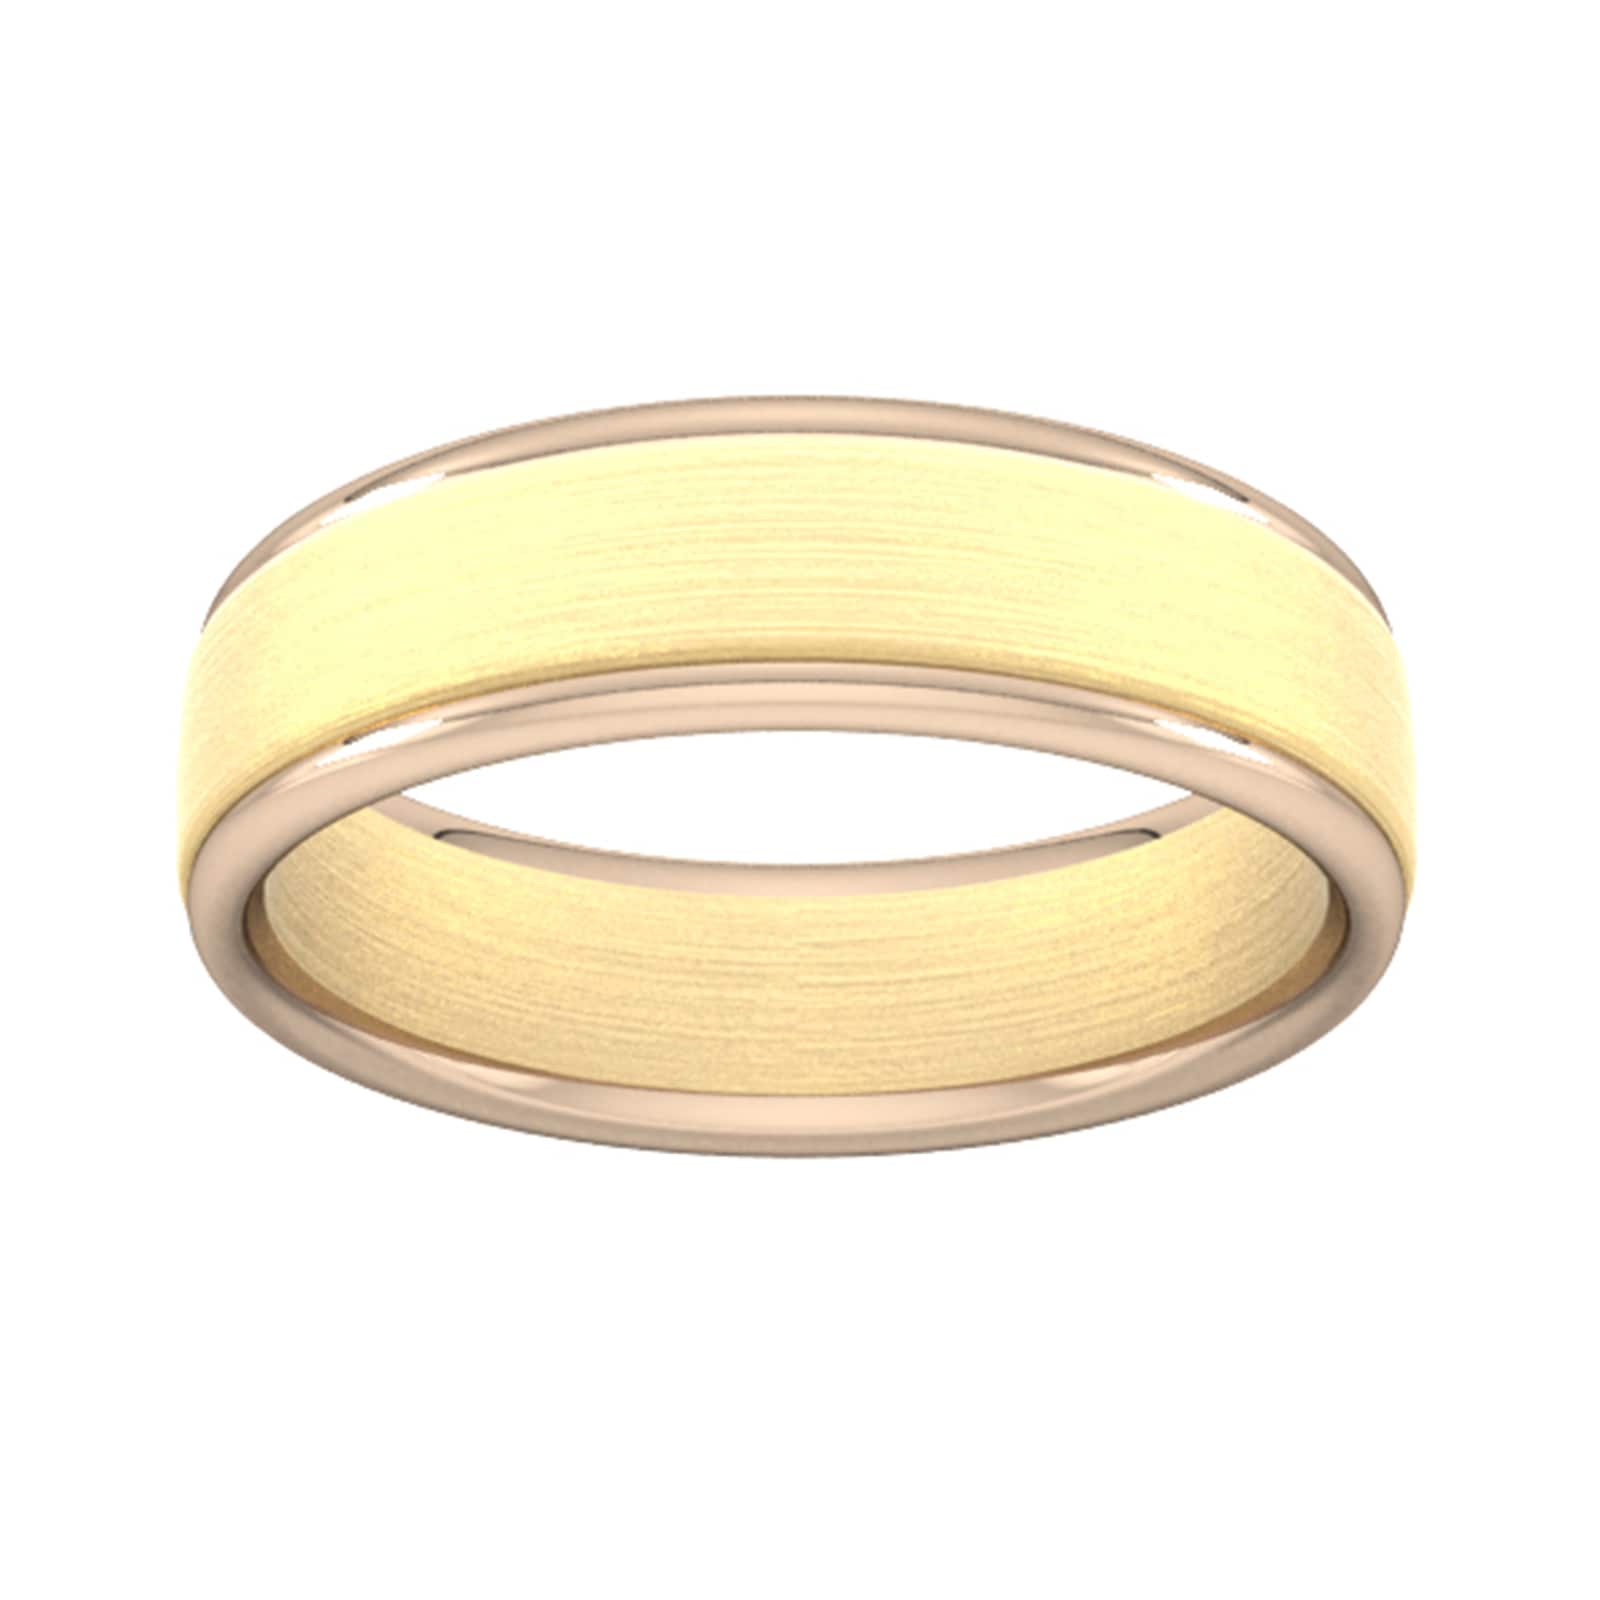 6mm Wedding Ring In 18 Carat Yellow & Rose Gold - Ring Size T